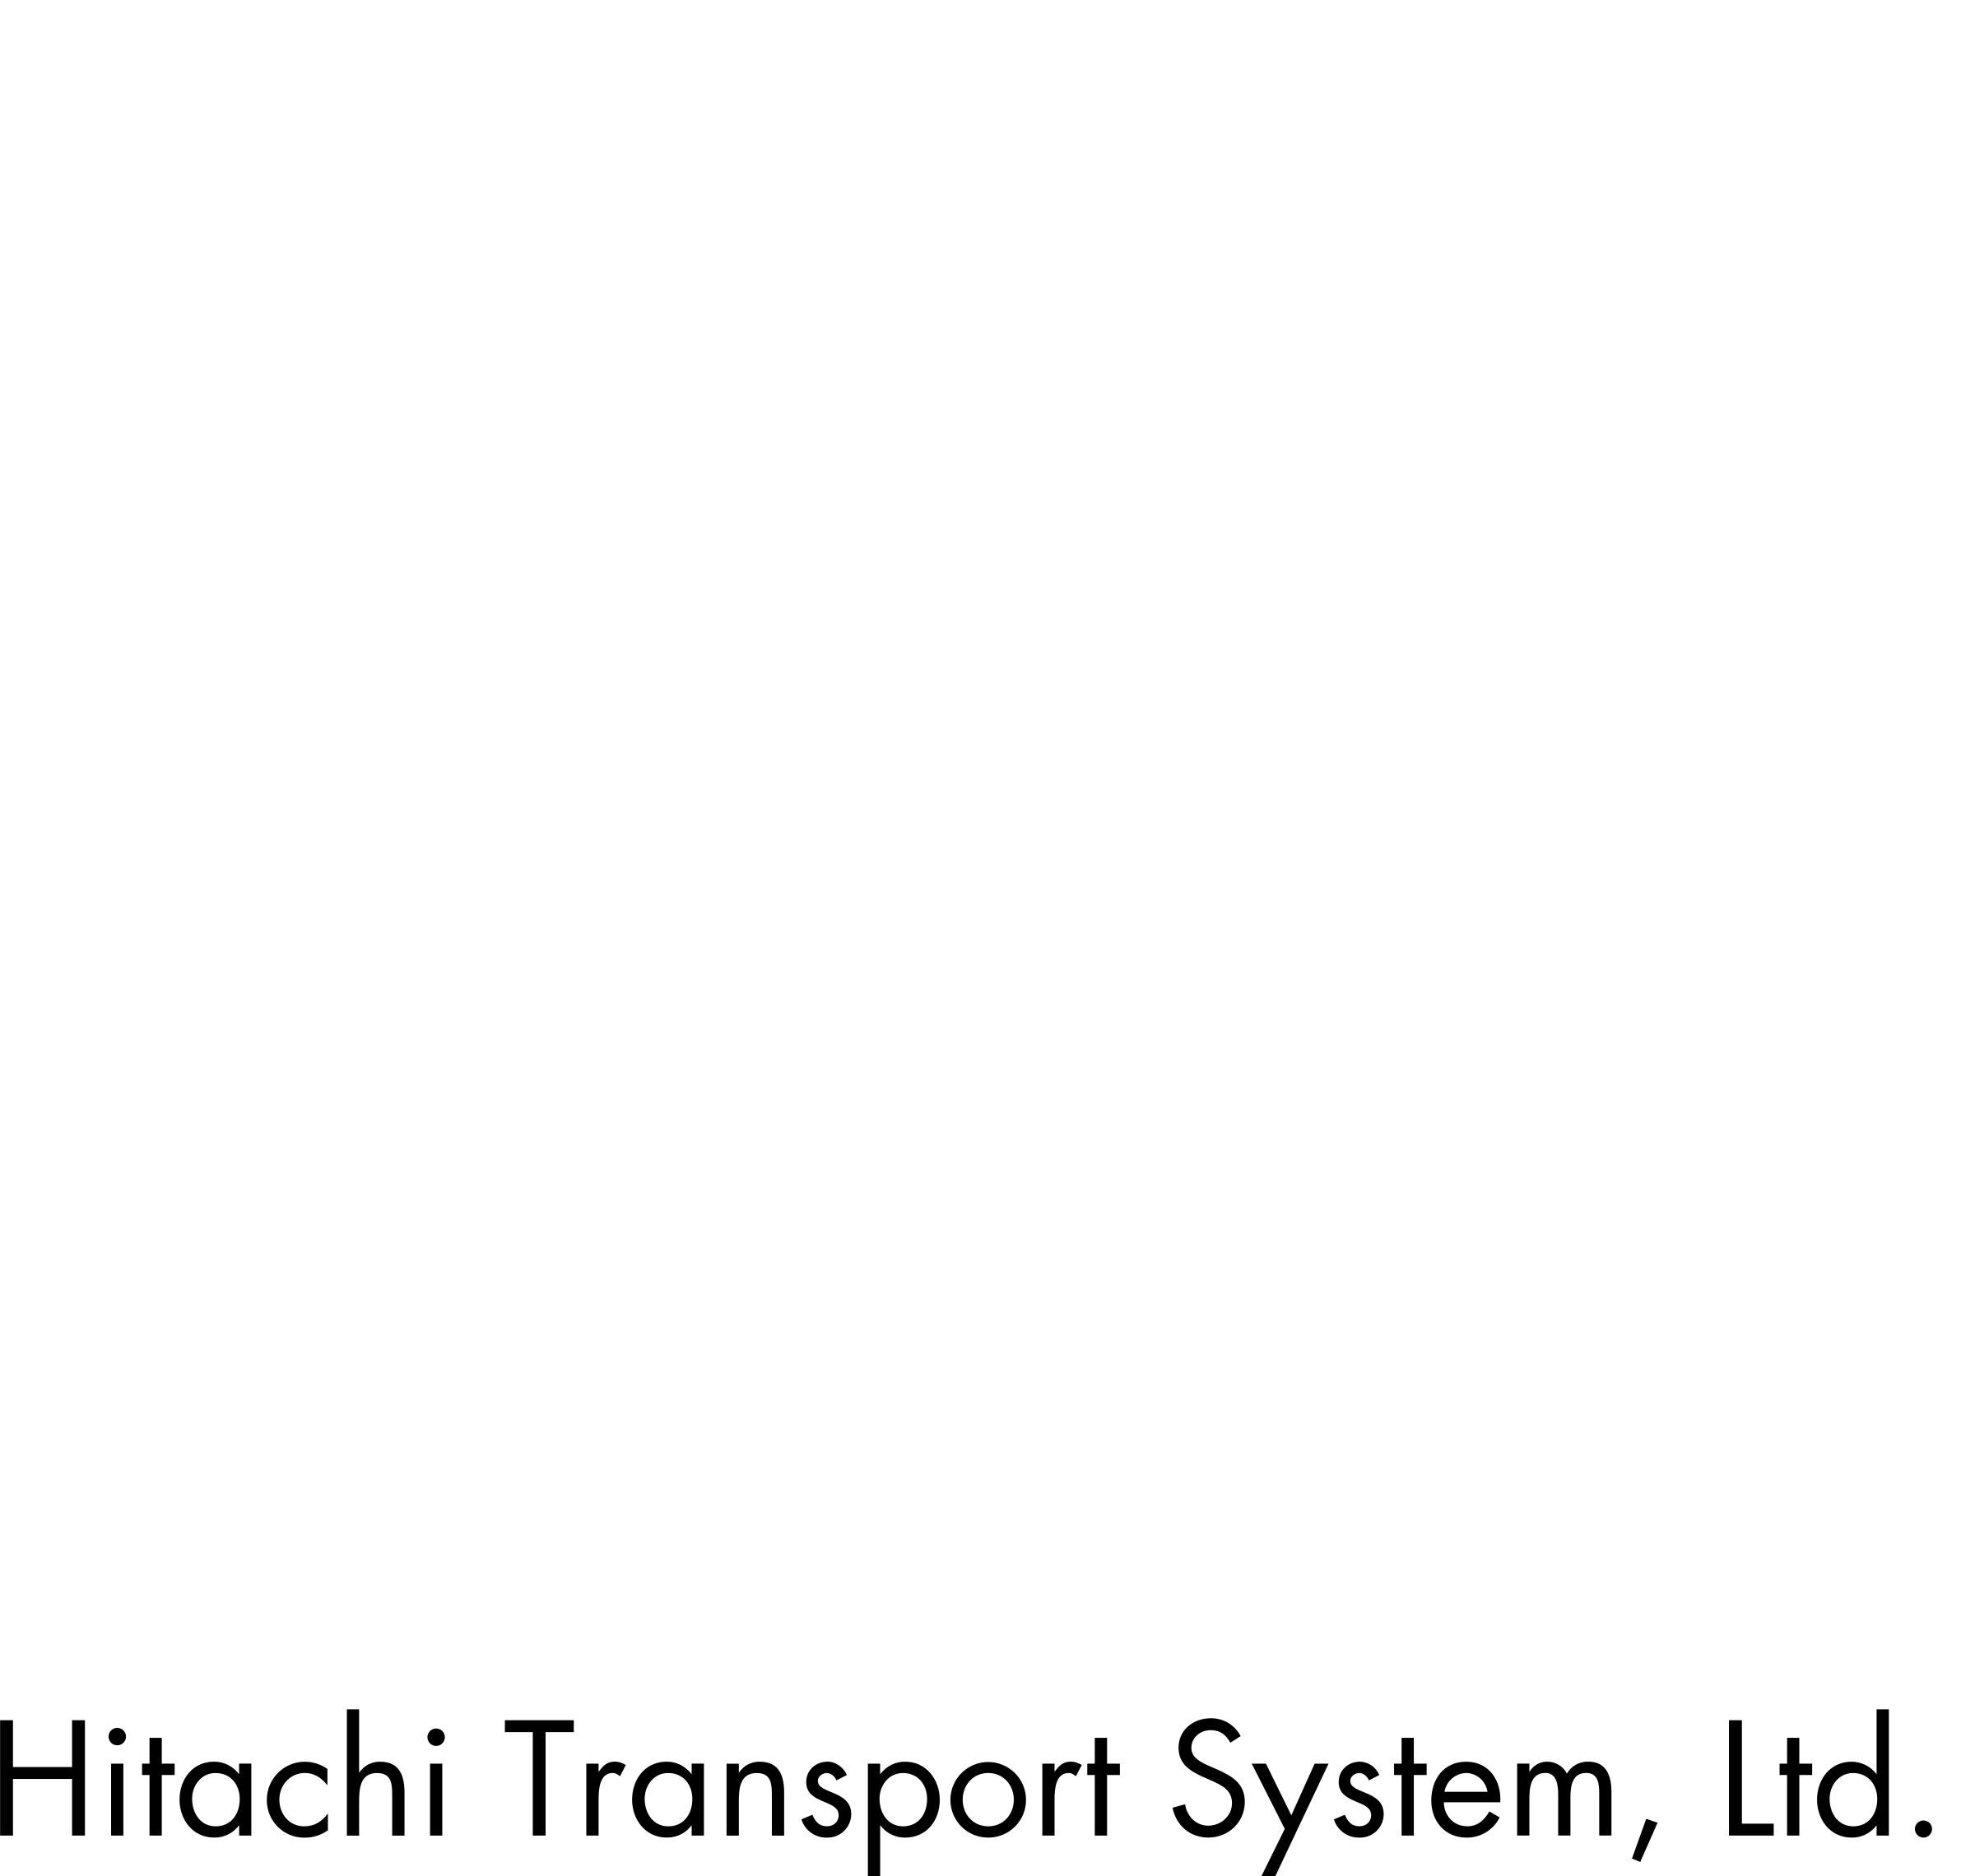 Hitachi White Logo - Hitachi Transport System Logo PNG Transparent & SVG Vector - Freebie ...